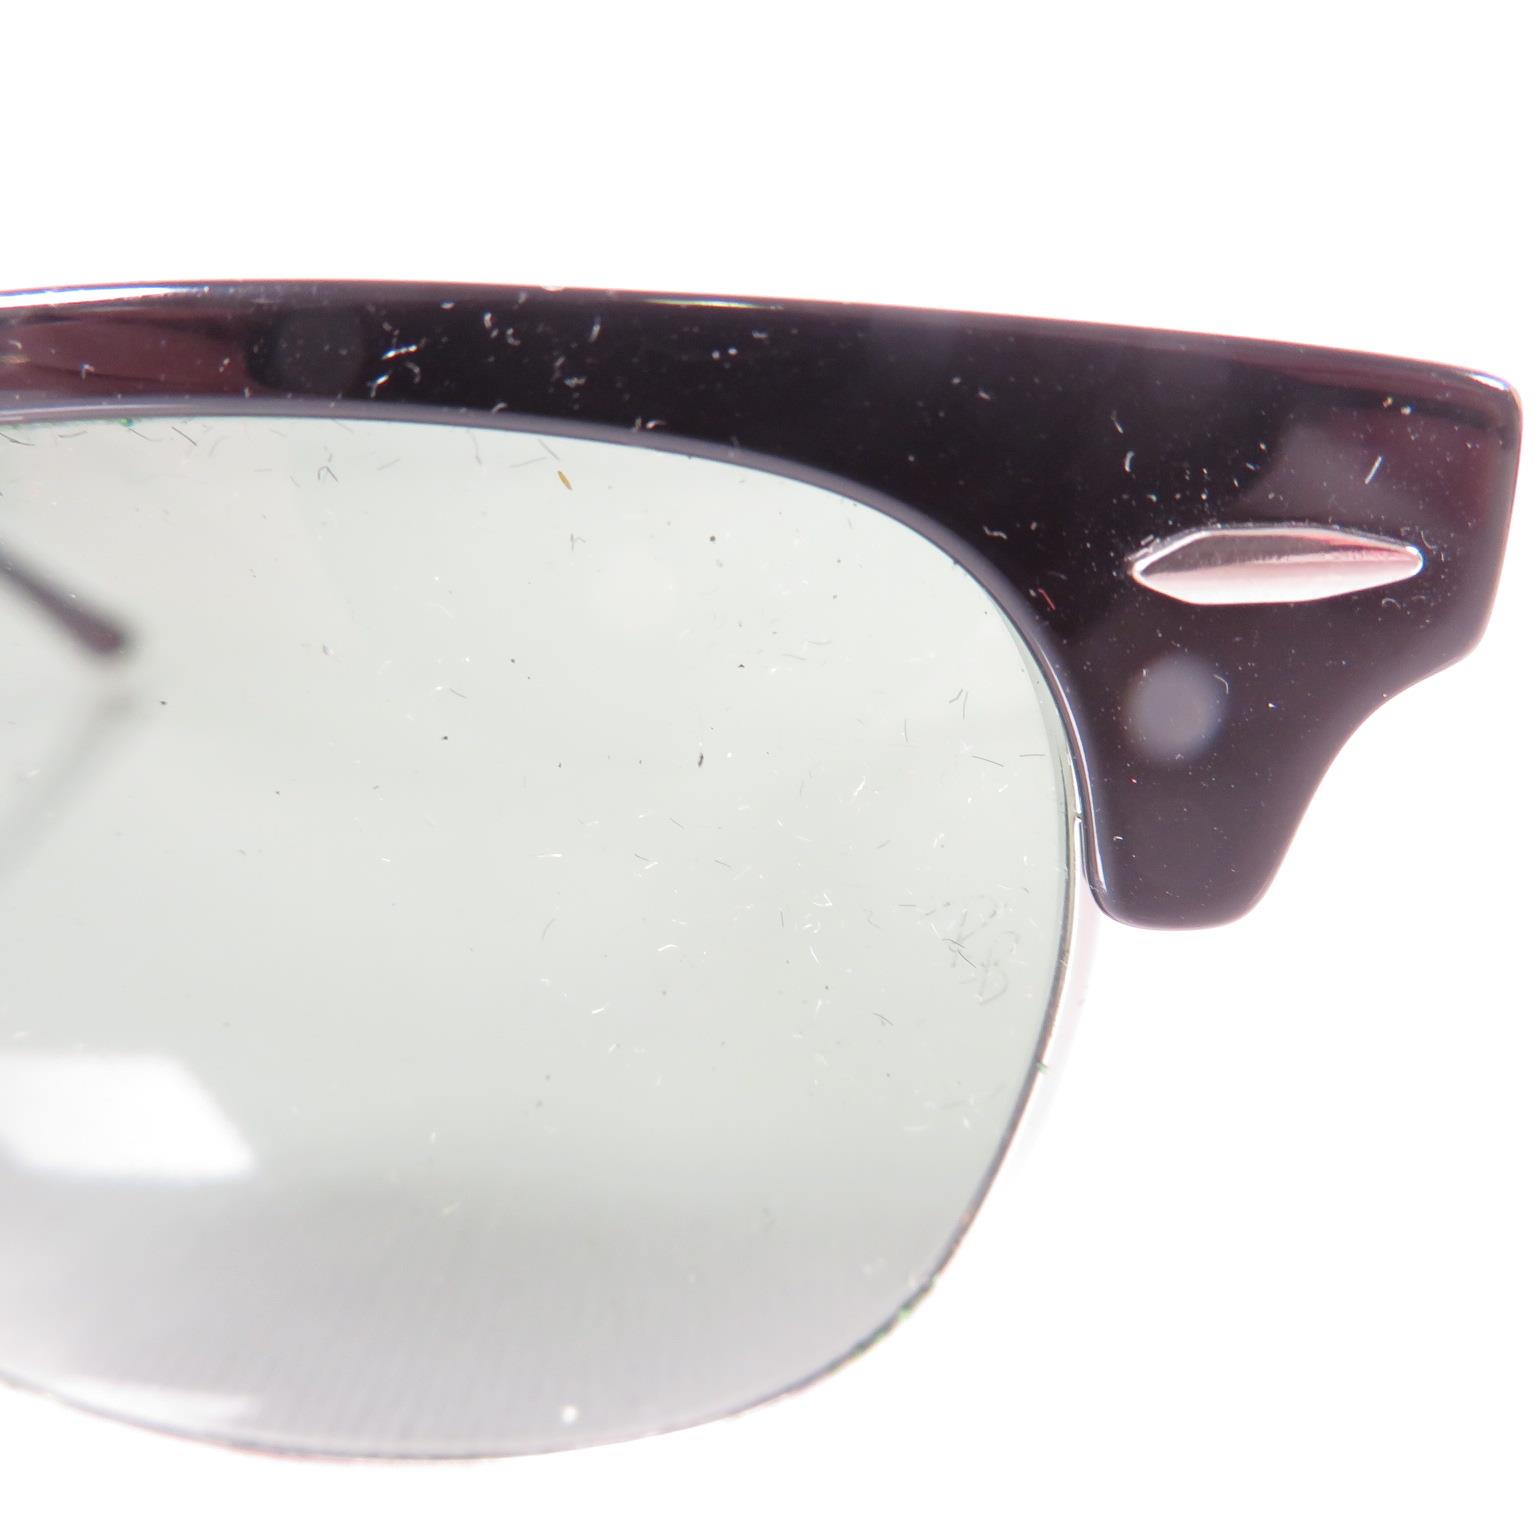 6x pairs Ray Ban sunglasses - - Image 25 of 31